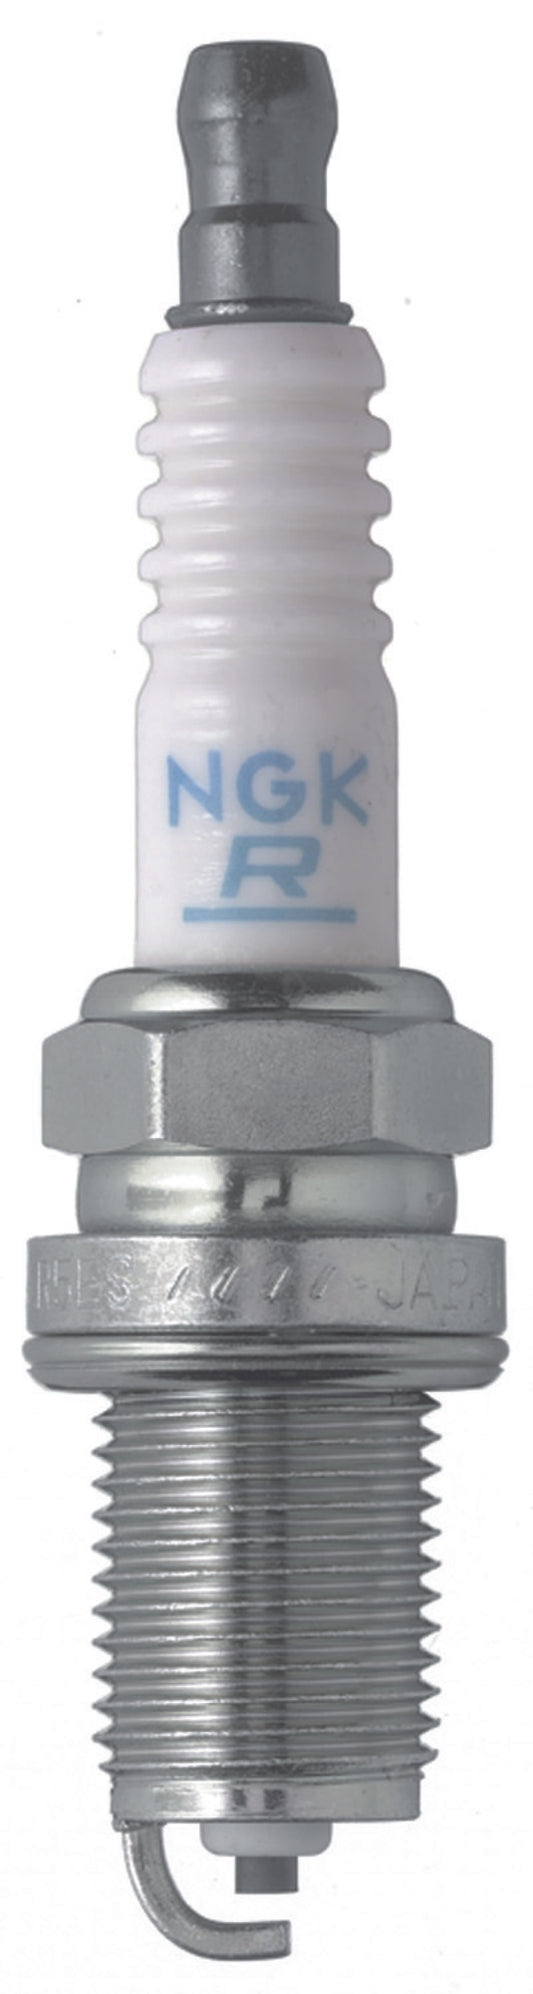 NGK V-Power Spark Plug Box of 4 (FR5)